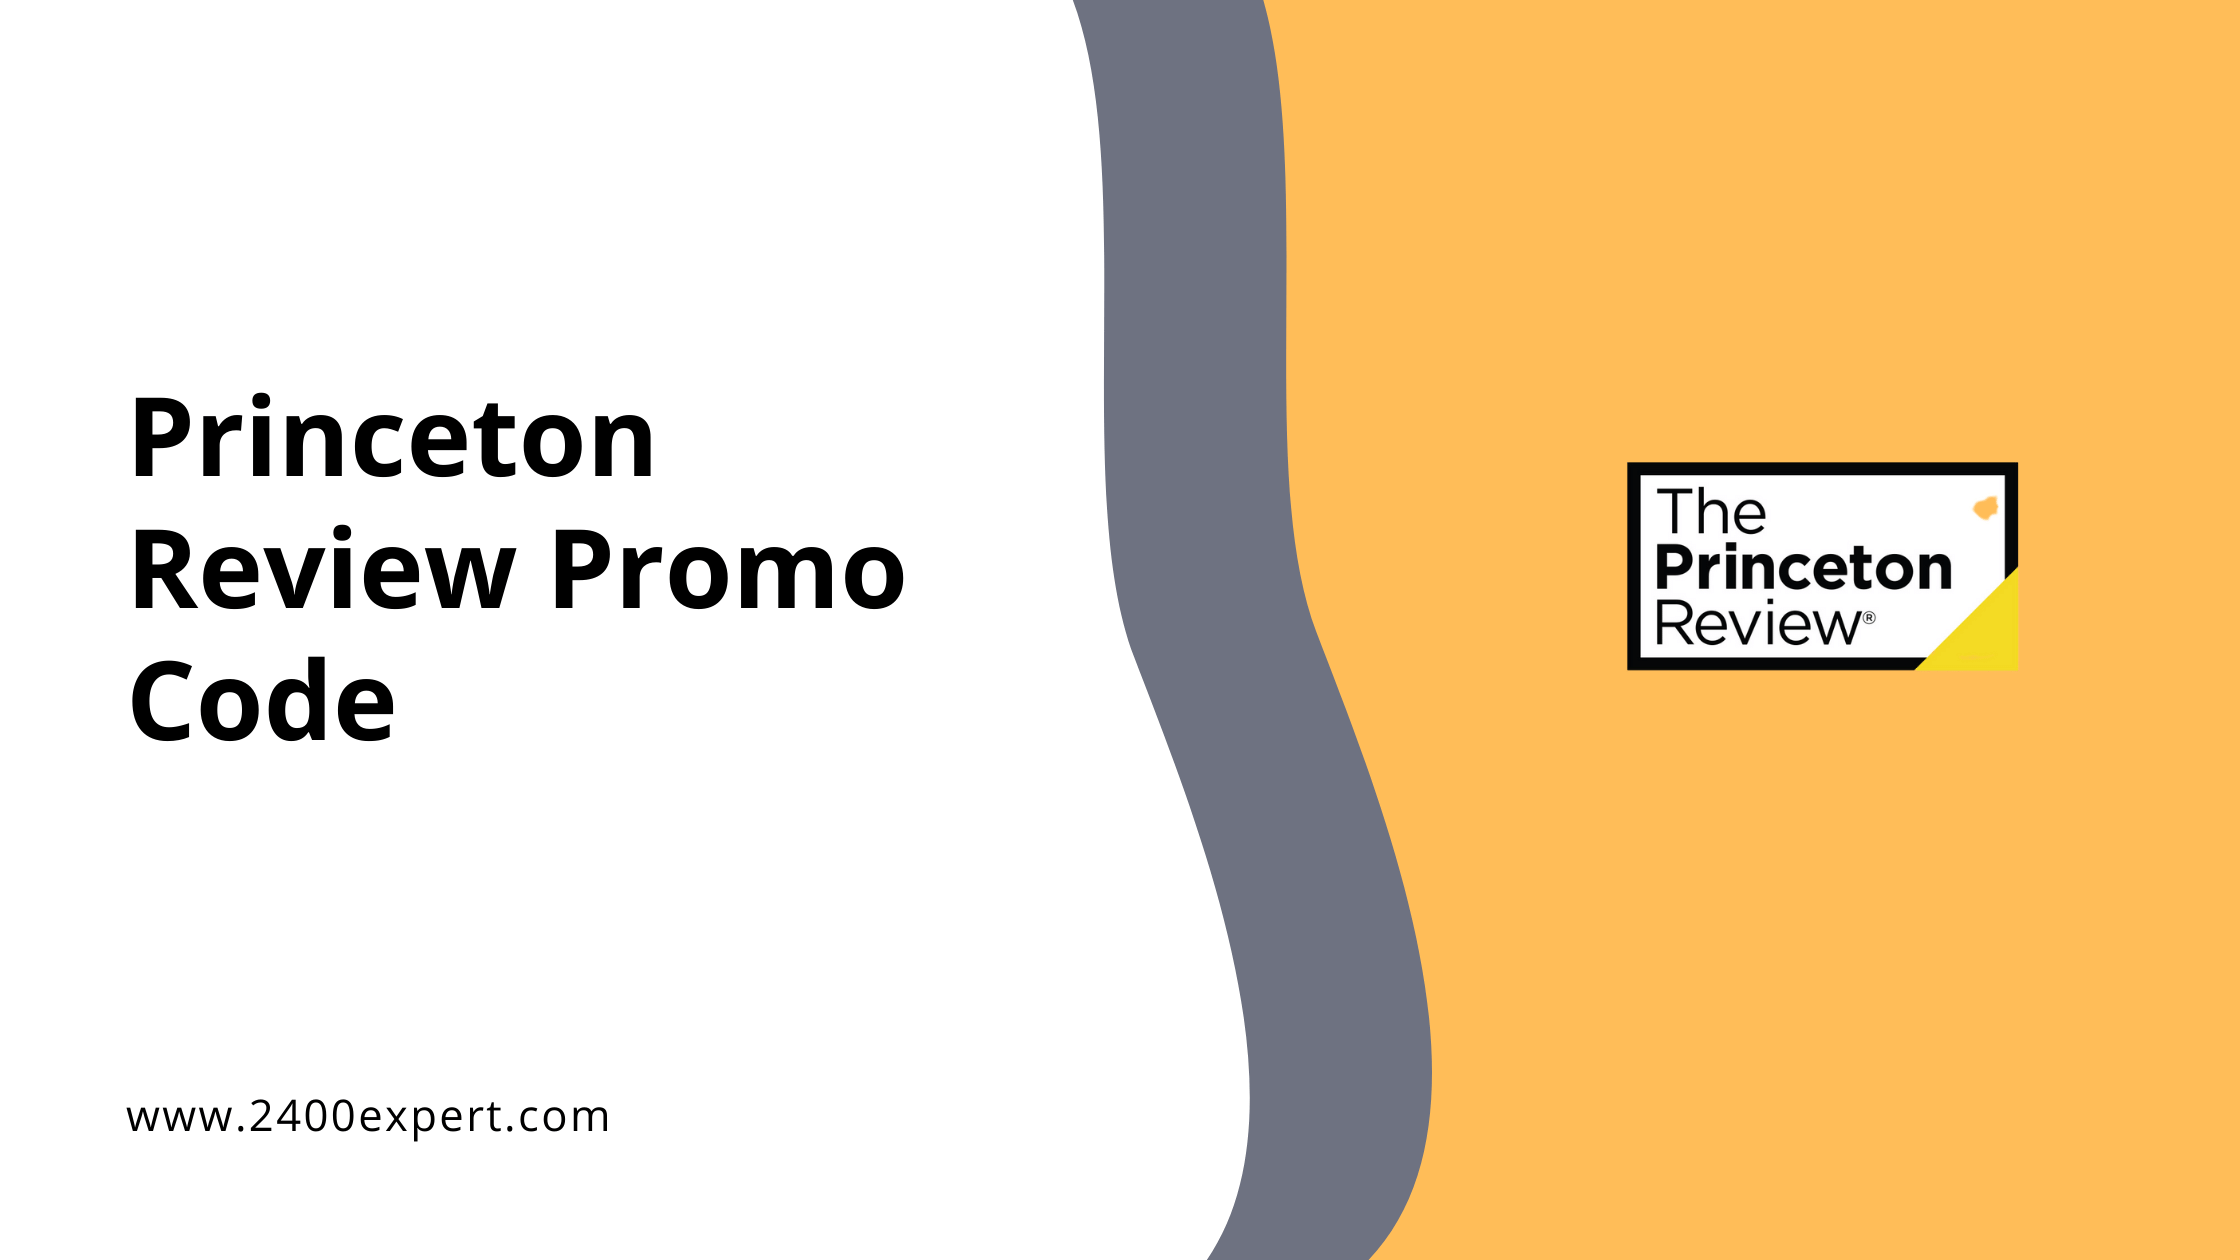 Princeton Review Promo Code - 2400Expert